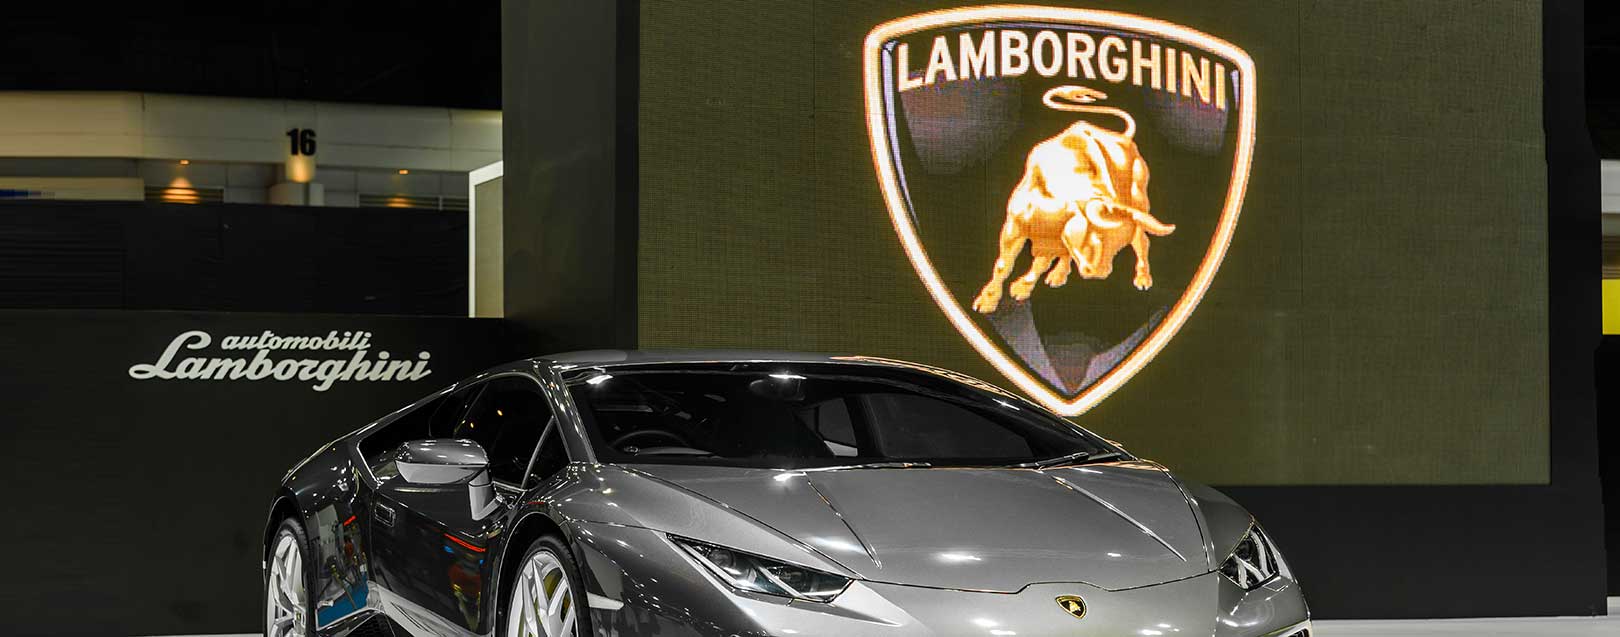 Lamborghini sales growth in India to continue in 2017